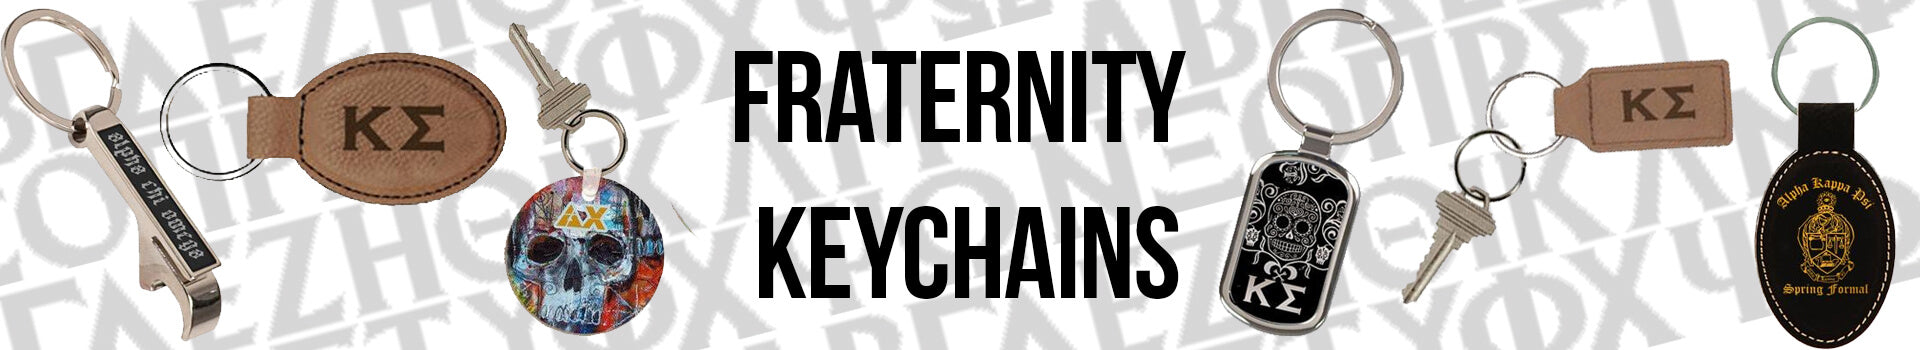 Greek Fraternity Keychain Accessories